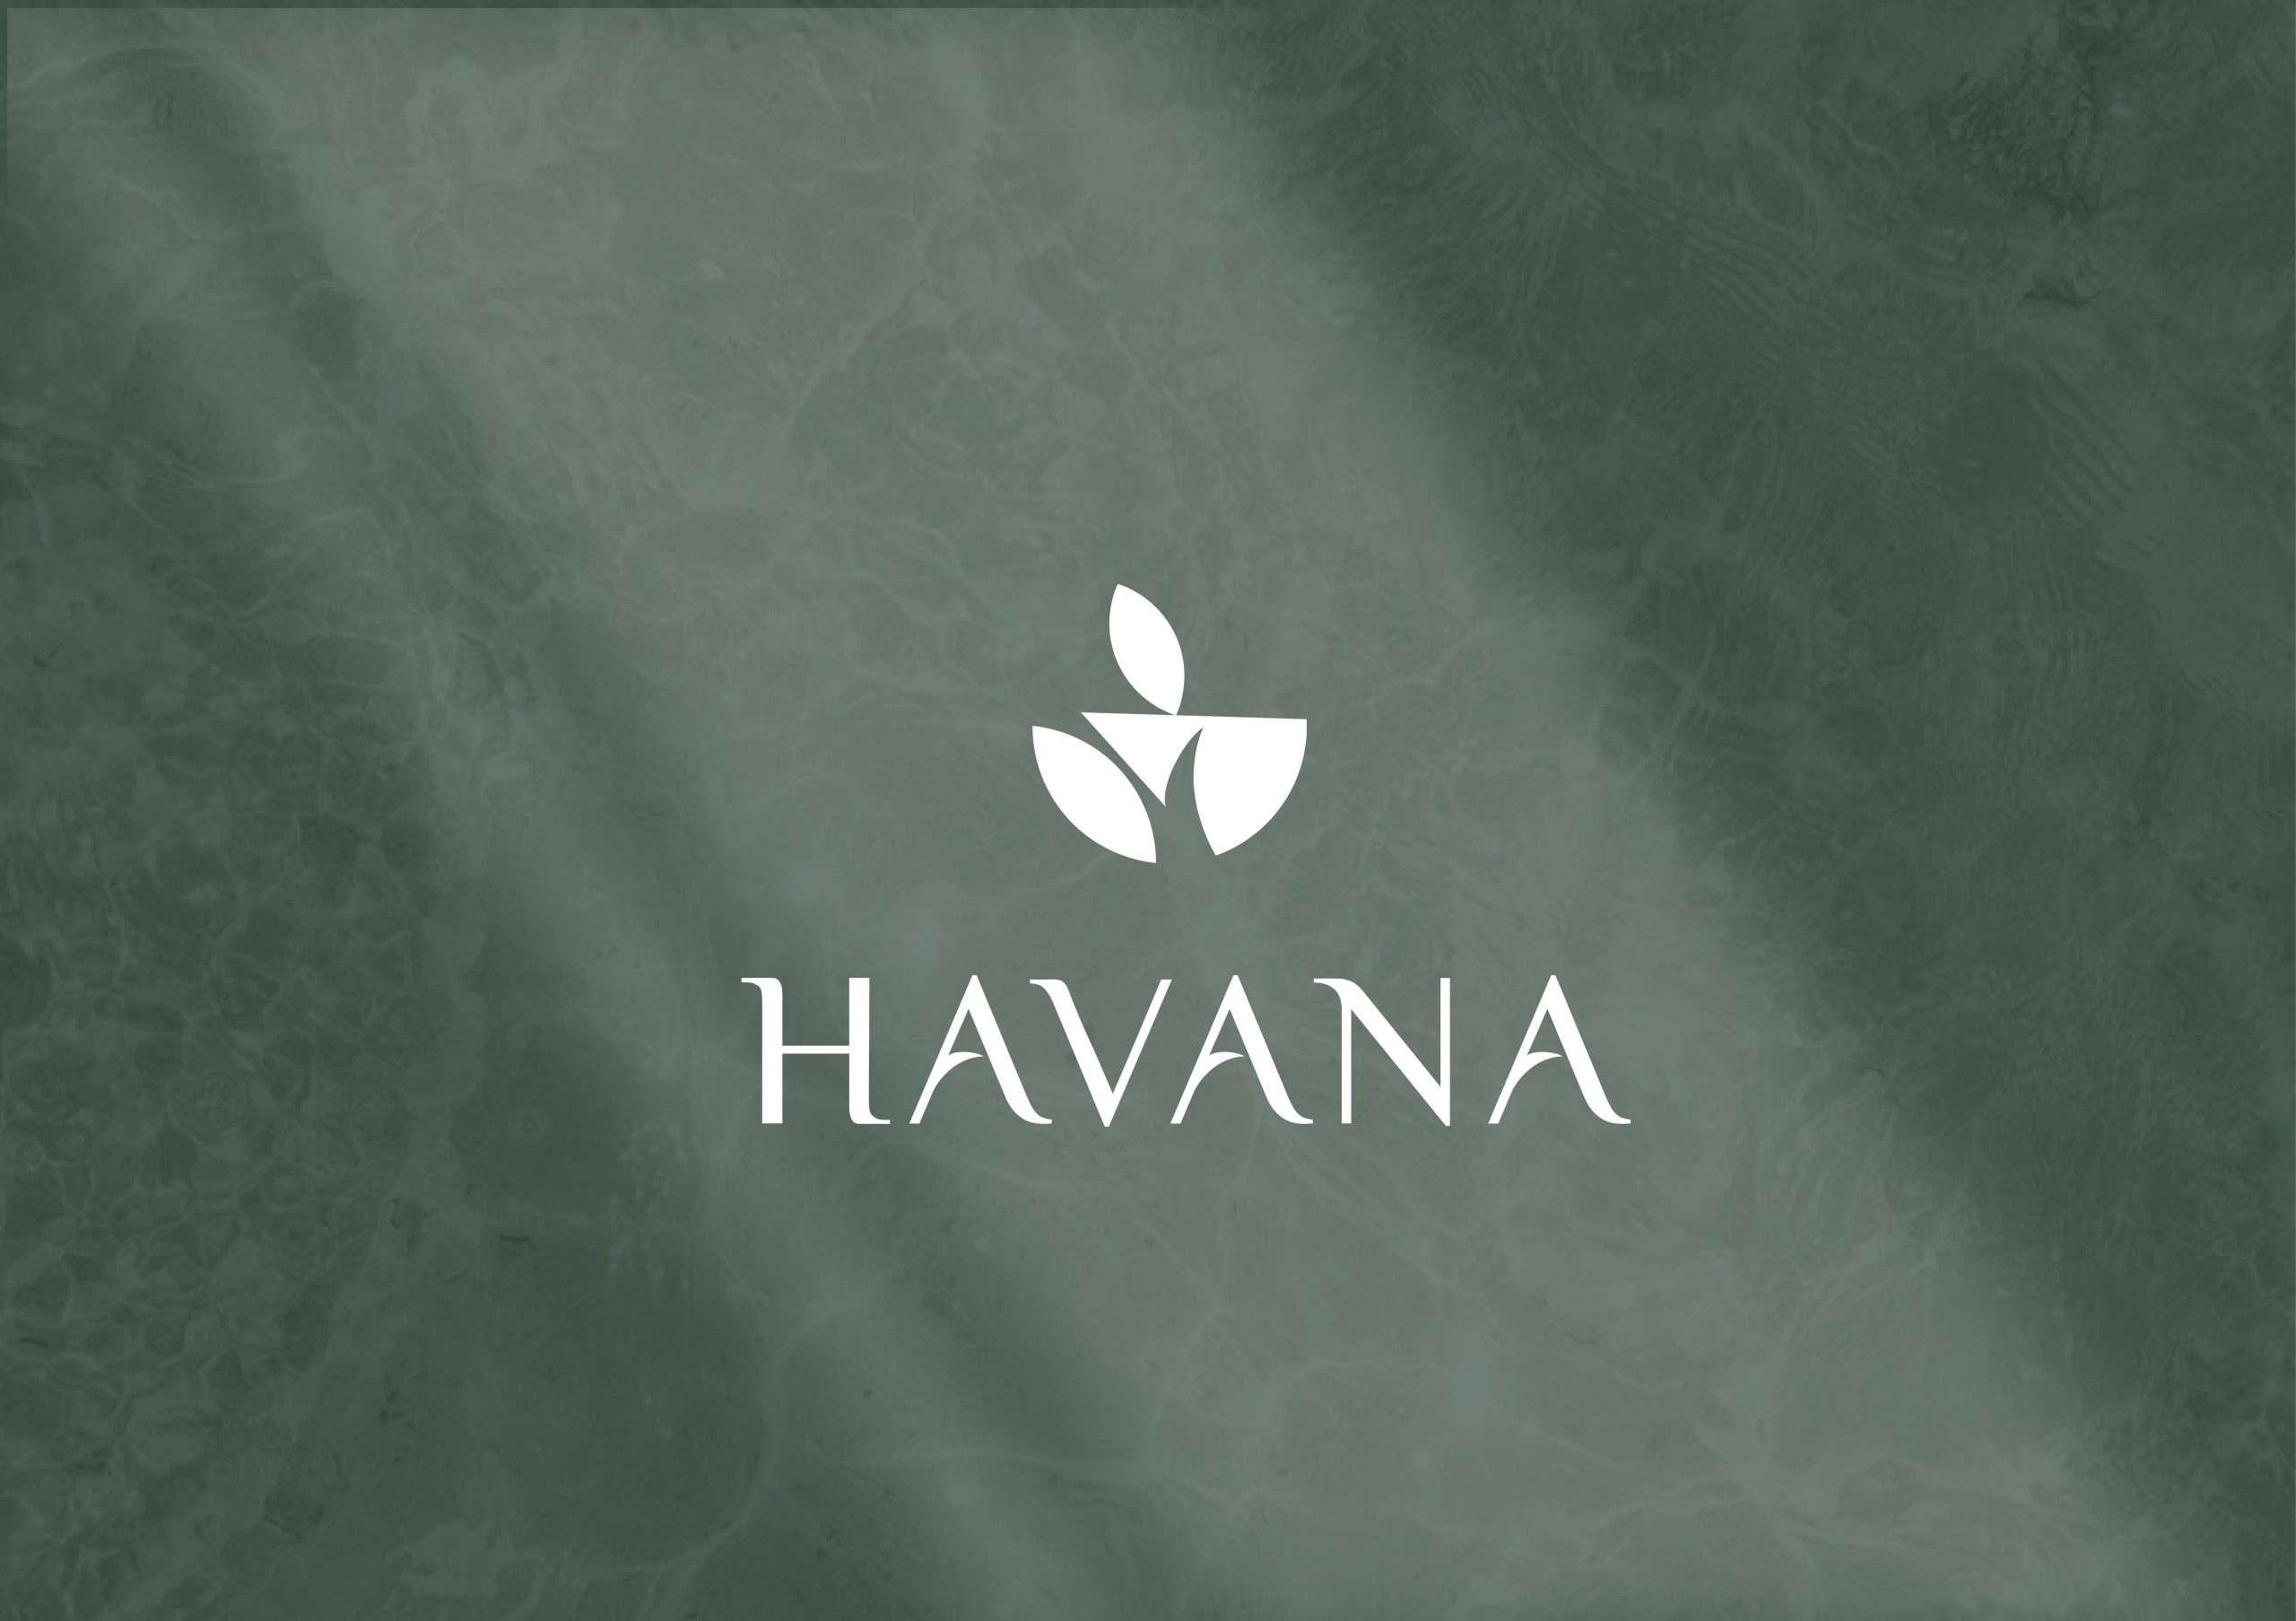 Havana purpose 01 scaled